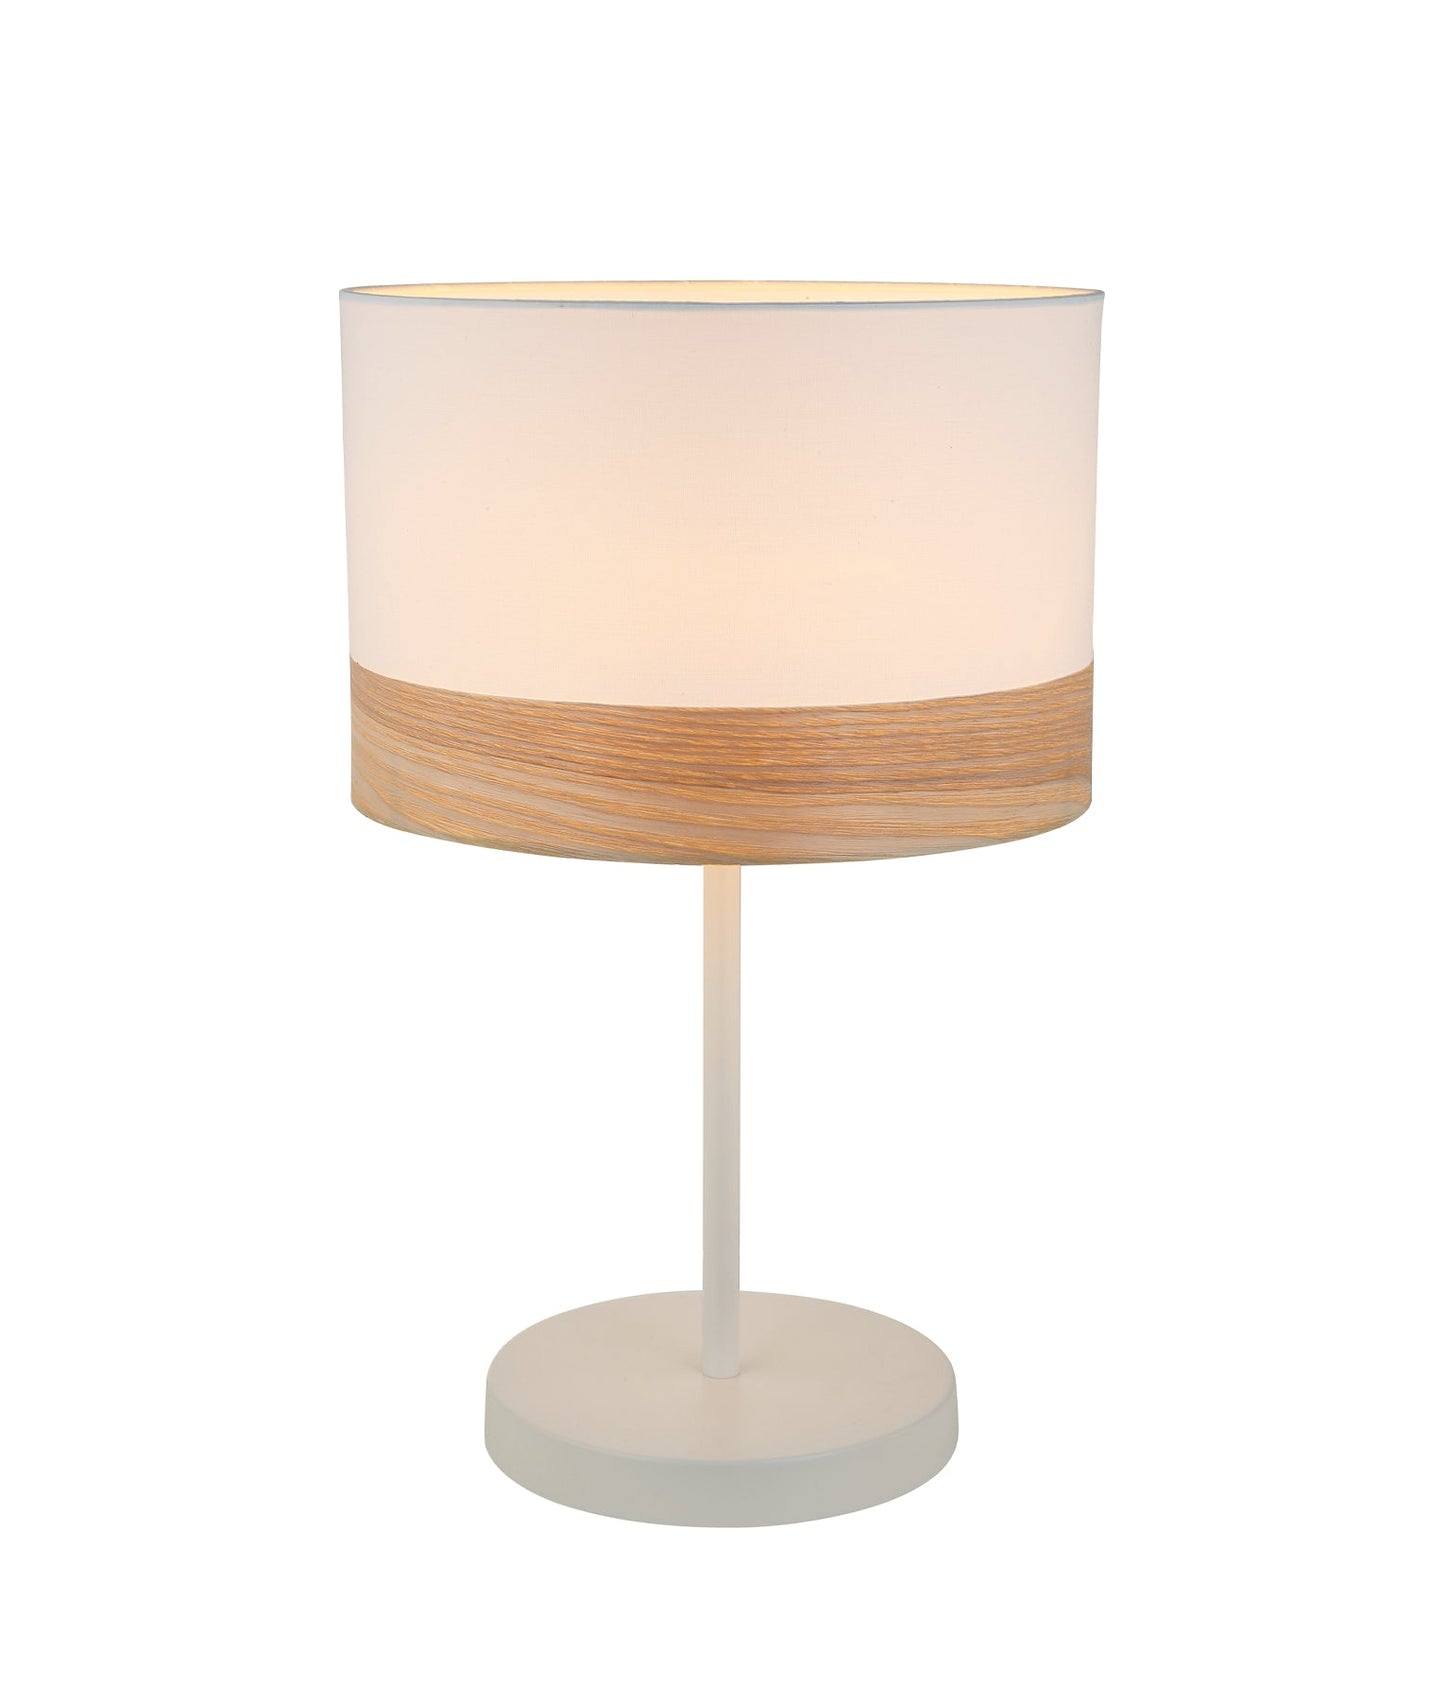 TAMBURA: Scandinavian Medium Round Shape Table Lamps